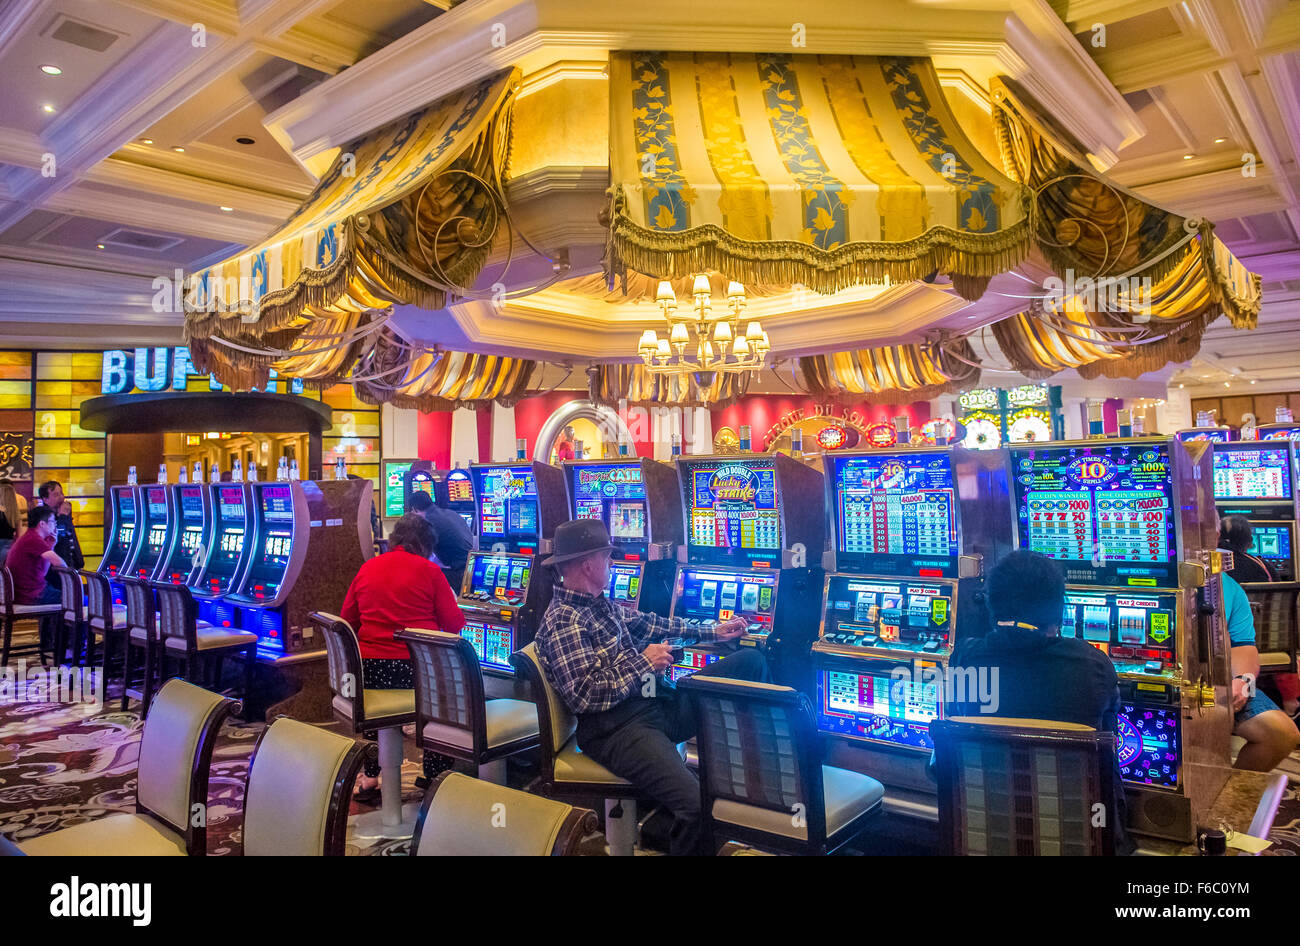 7,642 Las Vegas Casino Interior Images, Stock Photos, 3D objects, & Vectors